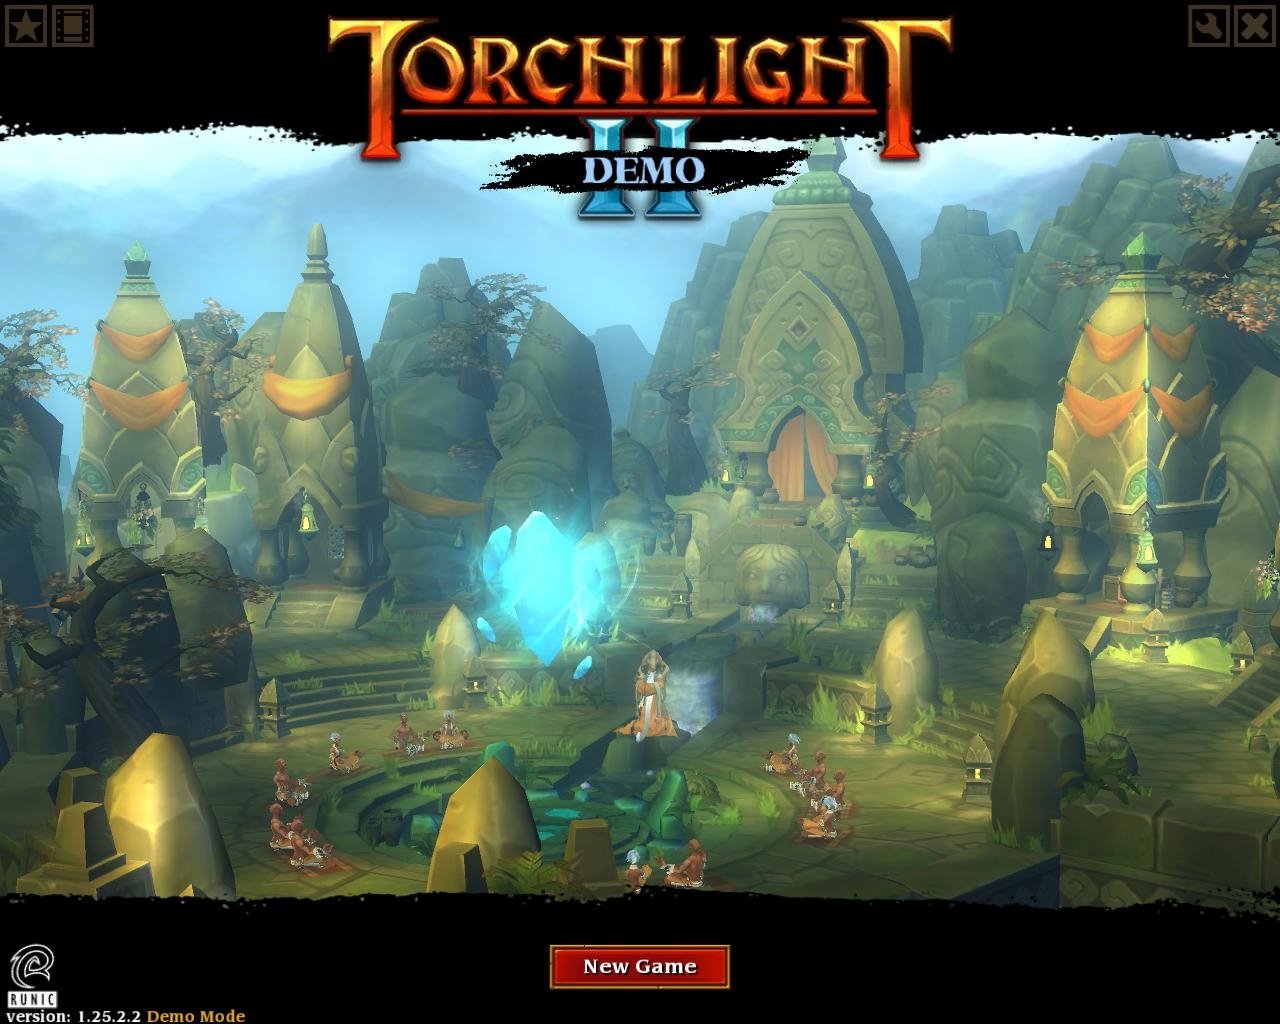 download torchlight 2 reddit for free